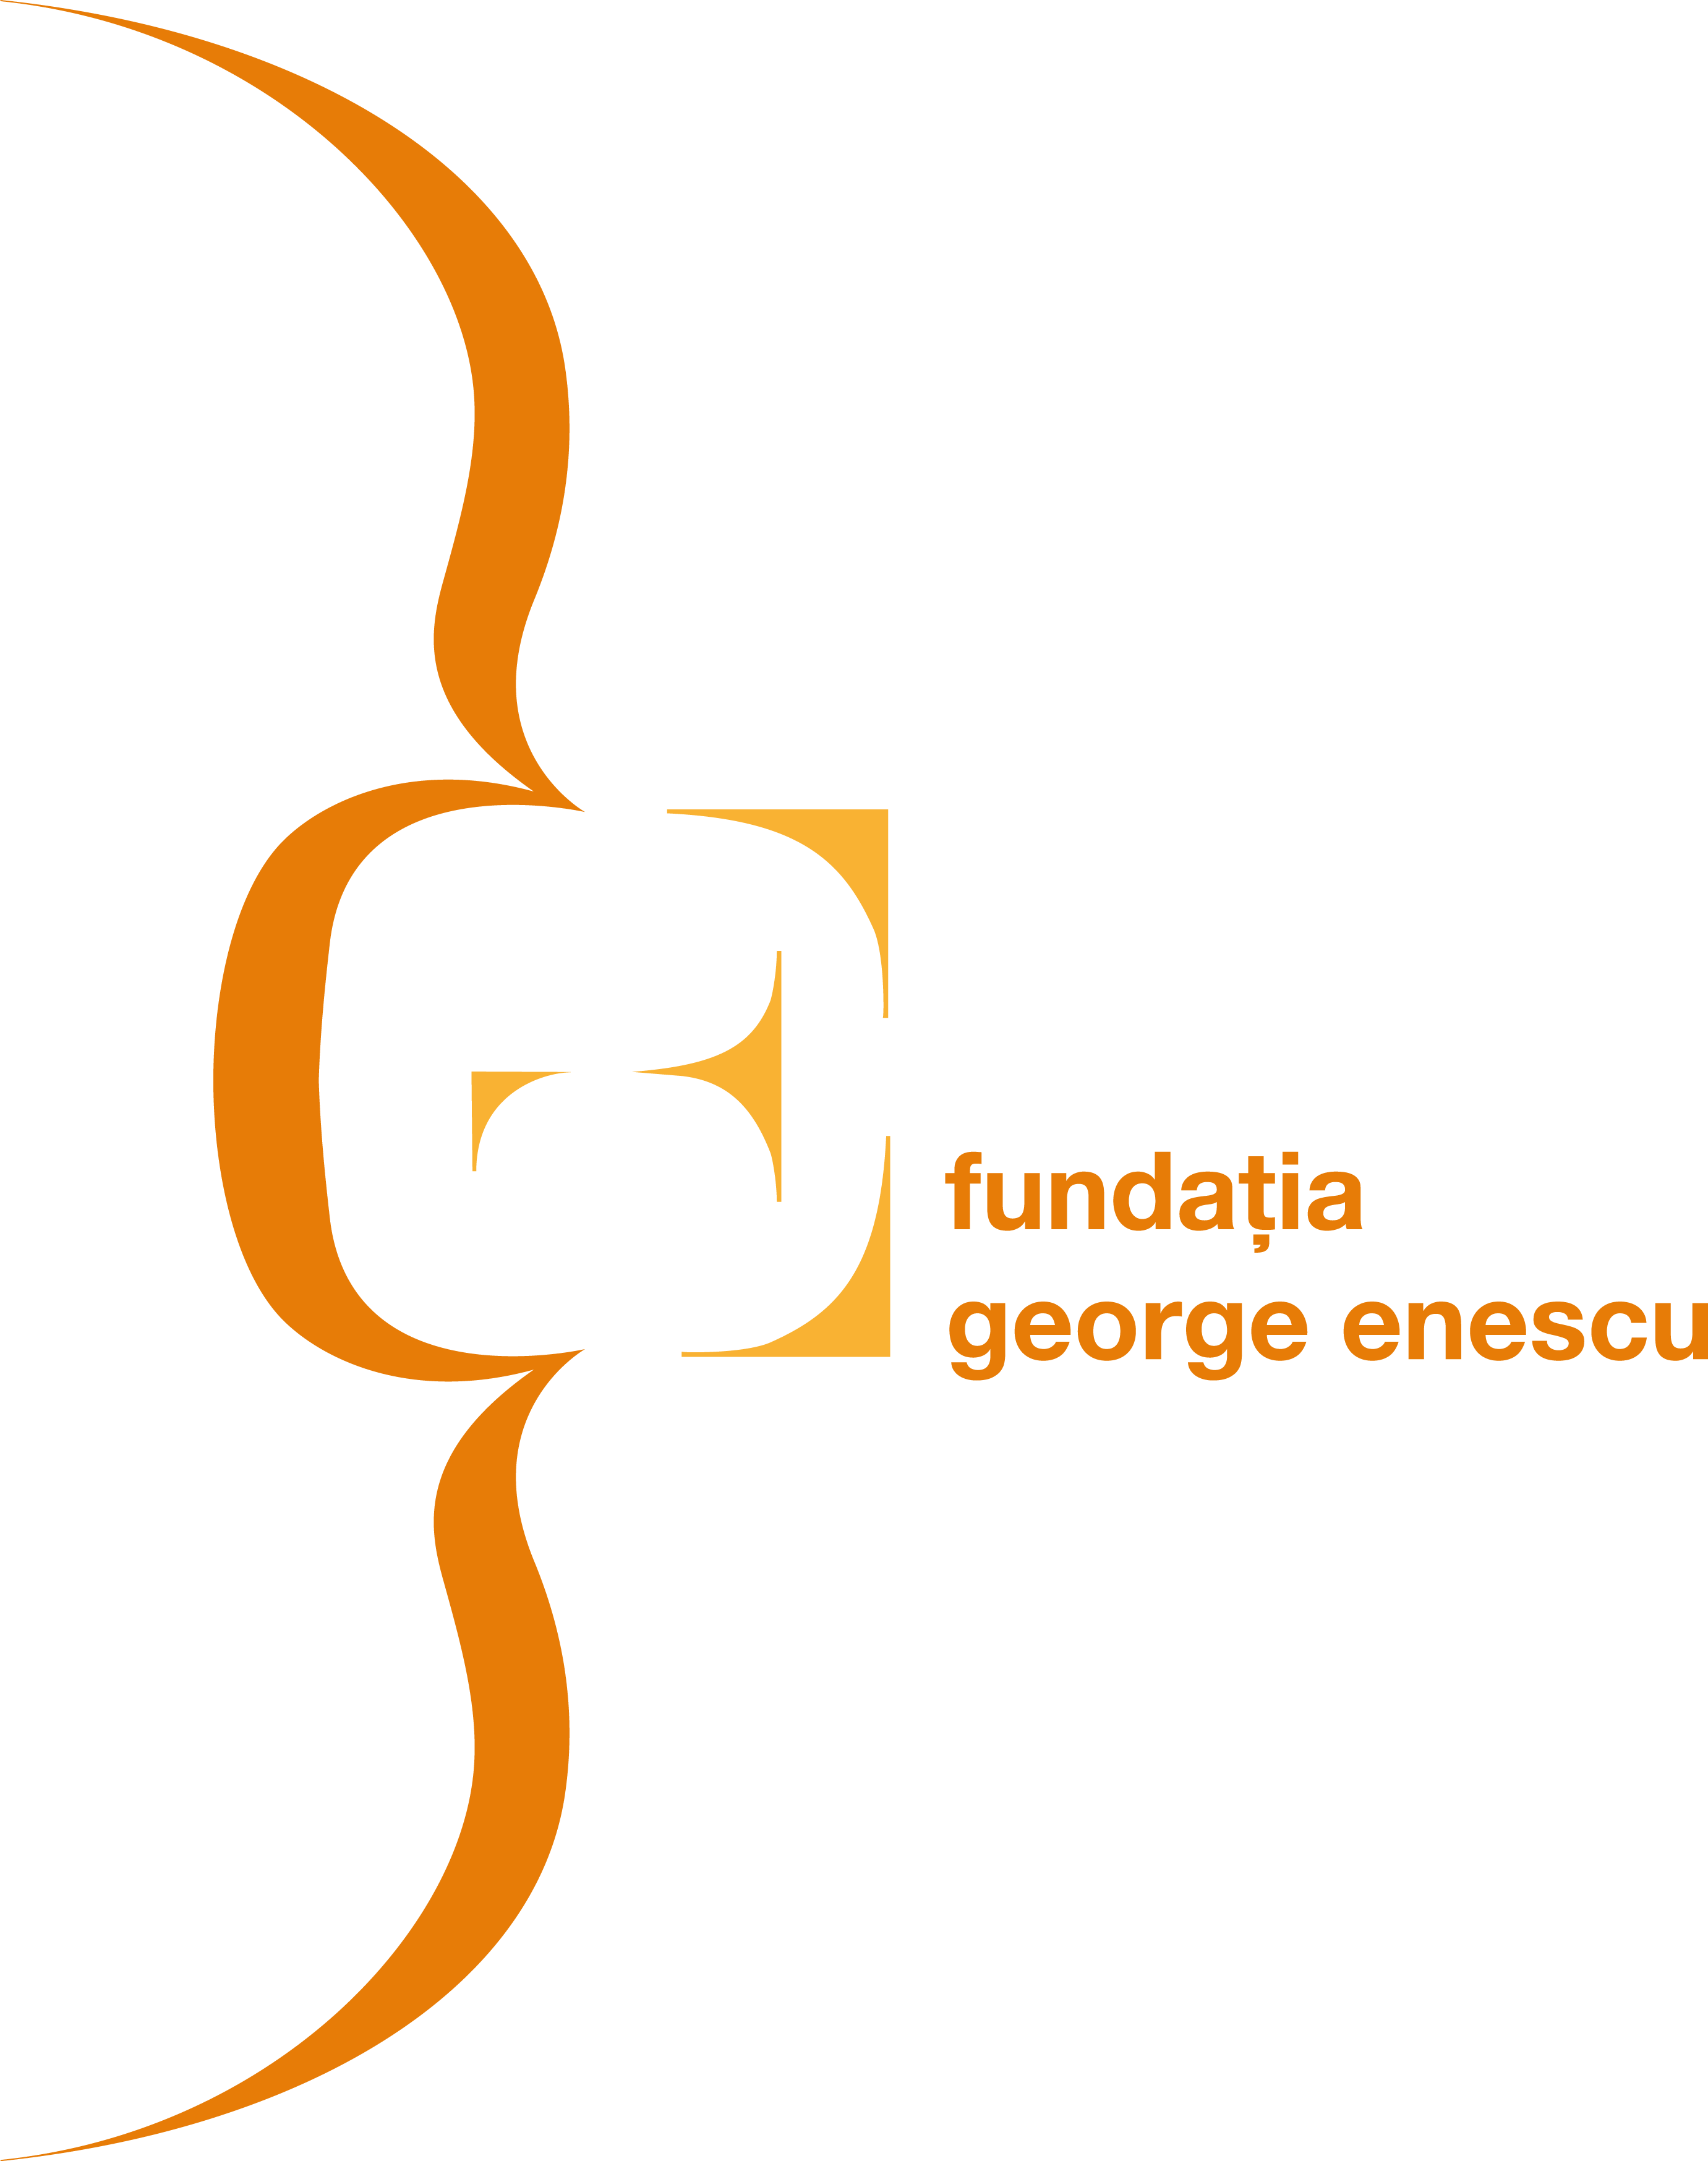 Fundatia George Enescu logo